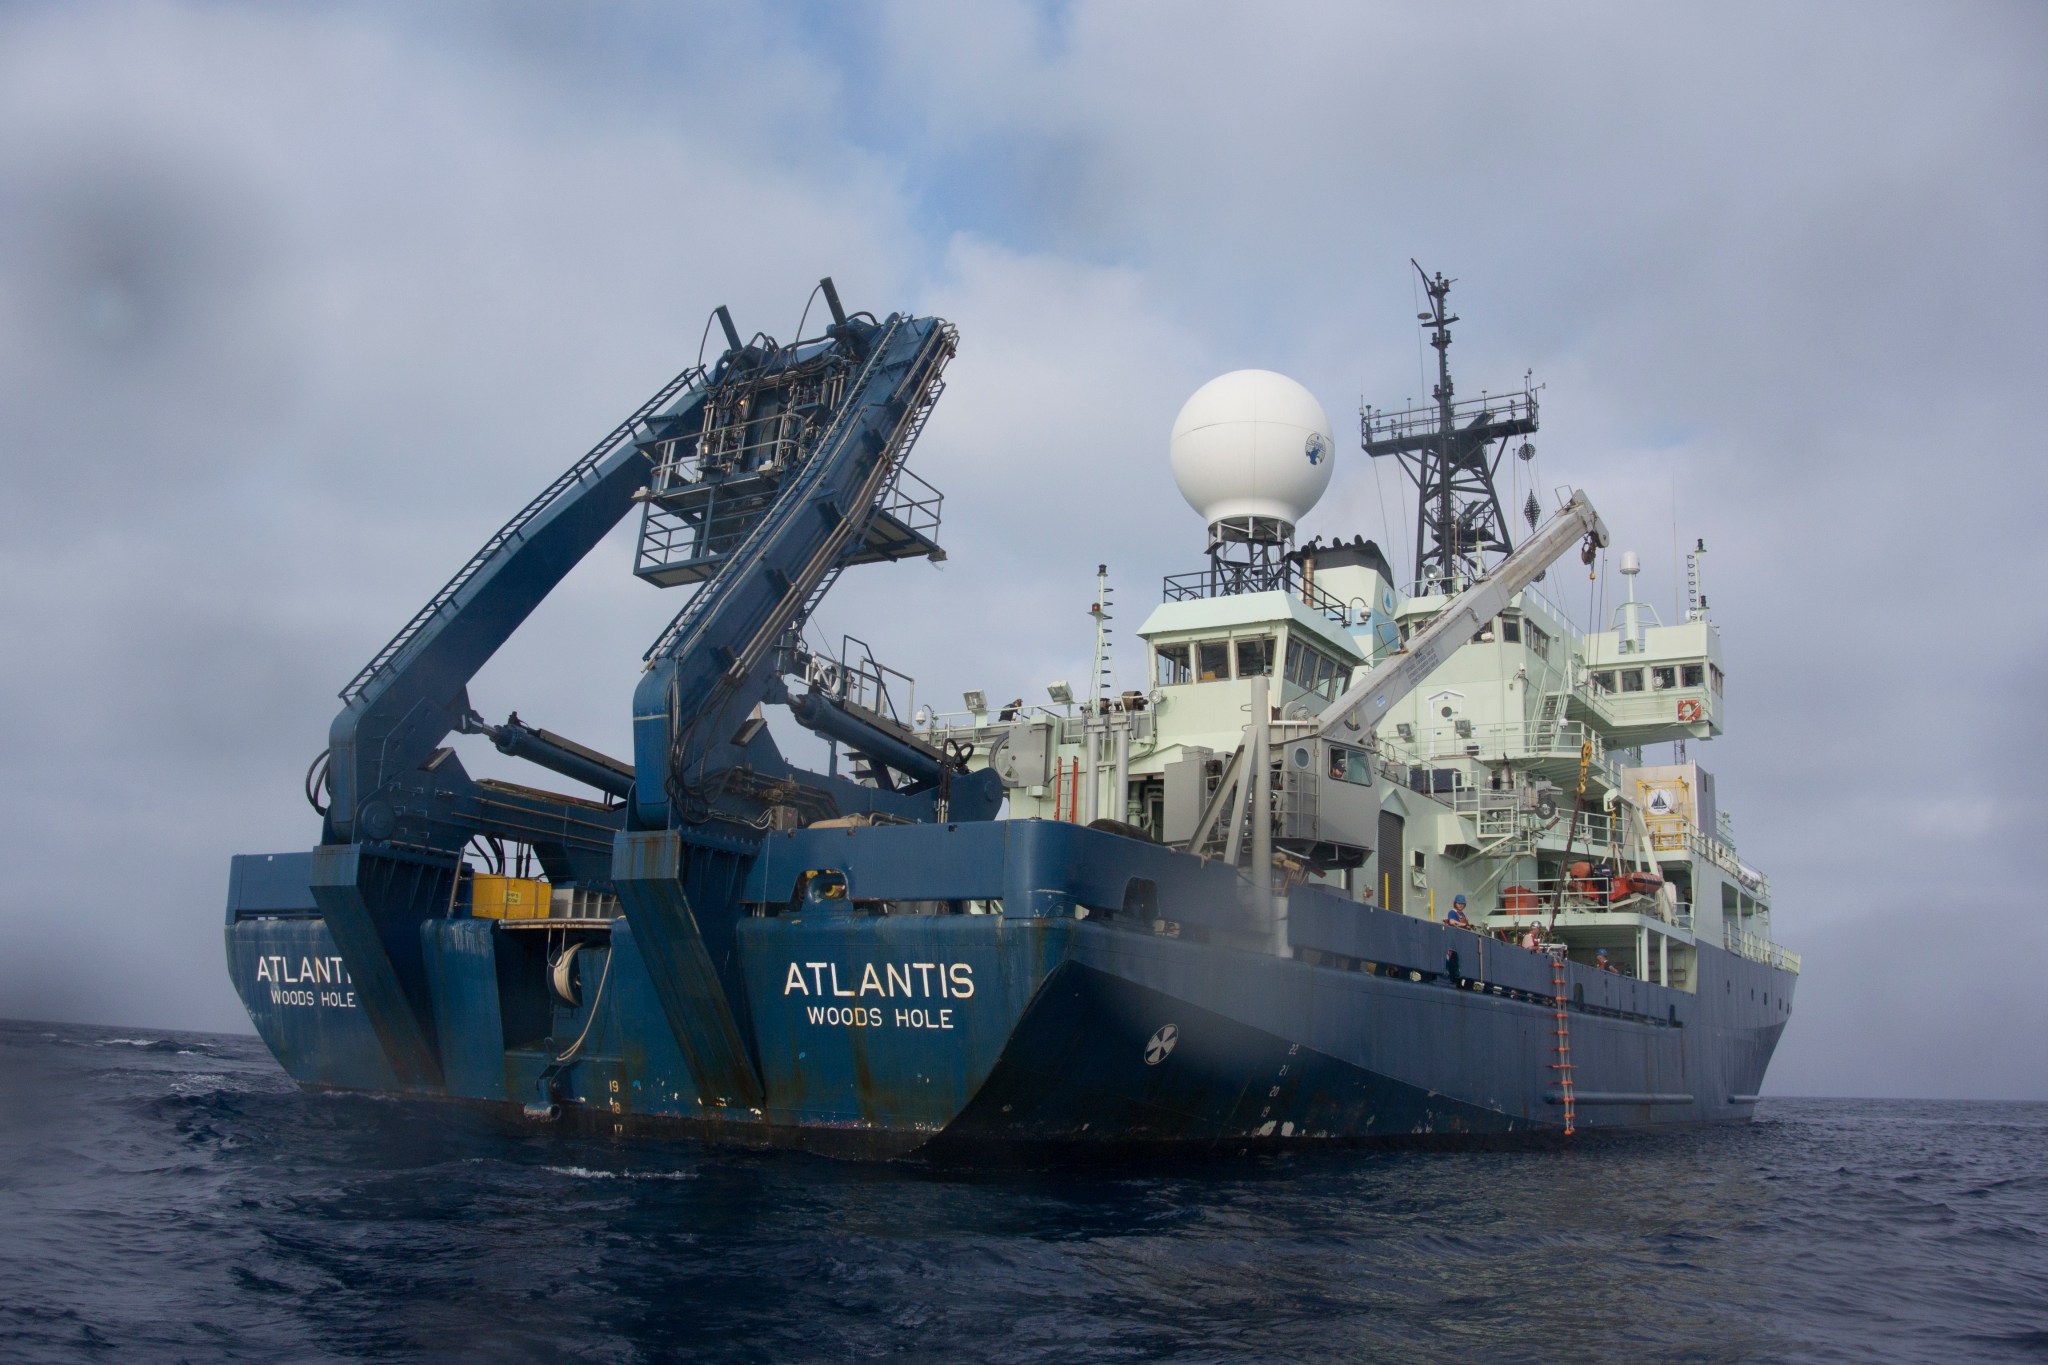 Woods Hole Oceanographic Institution's research vessel Atlantis